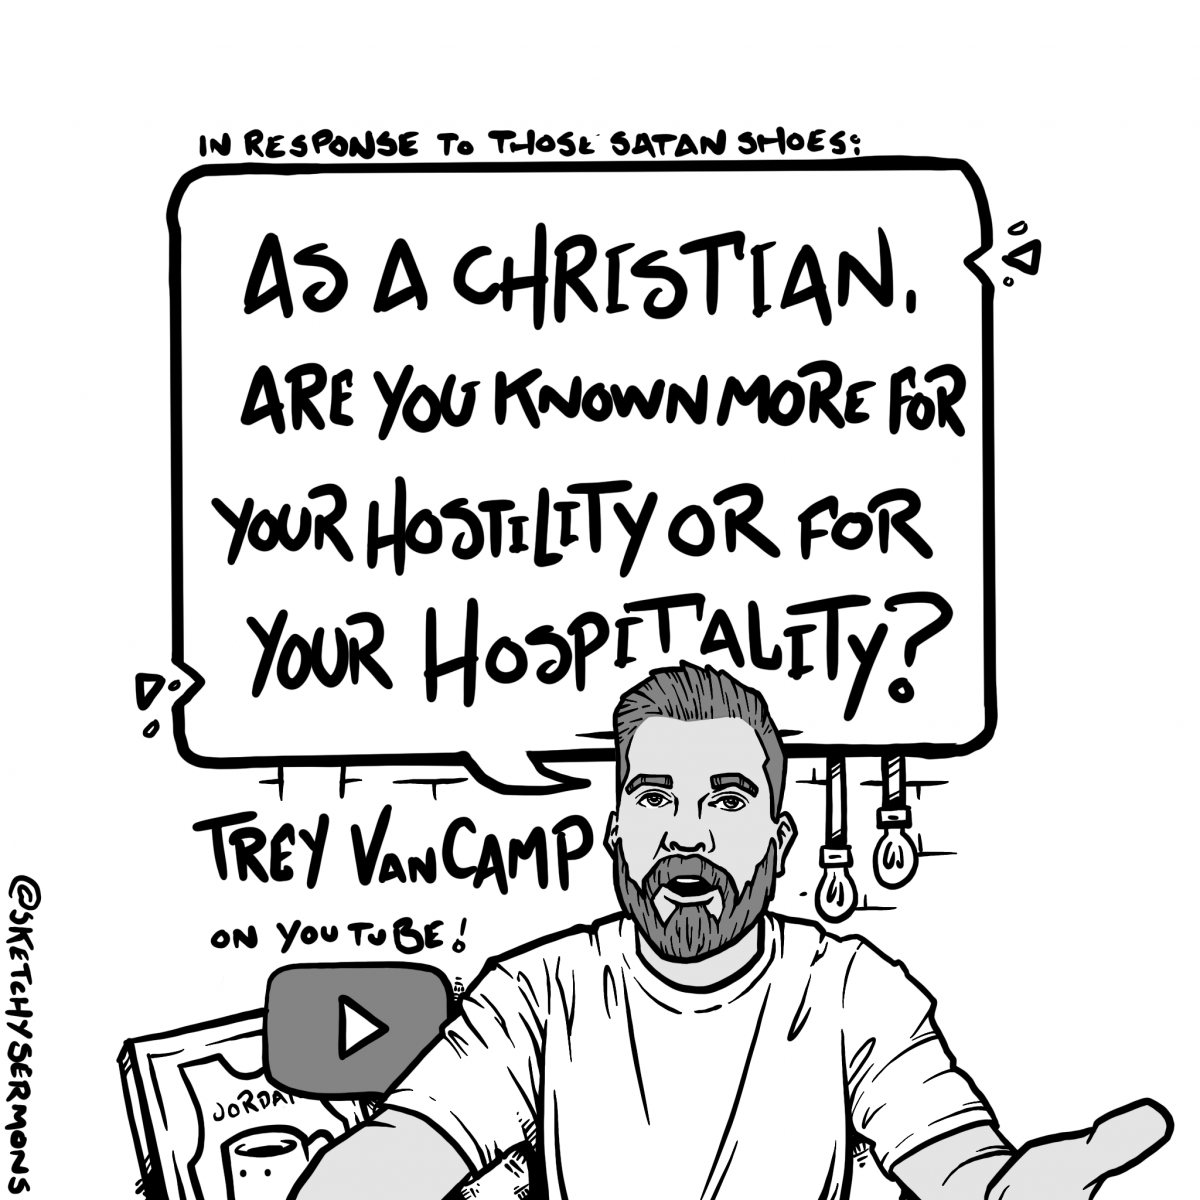 Hostility or Hospitality